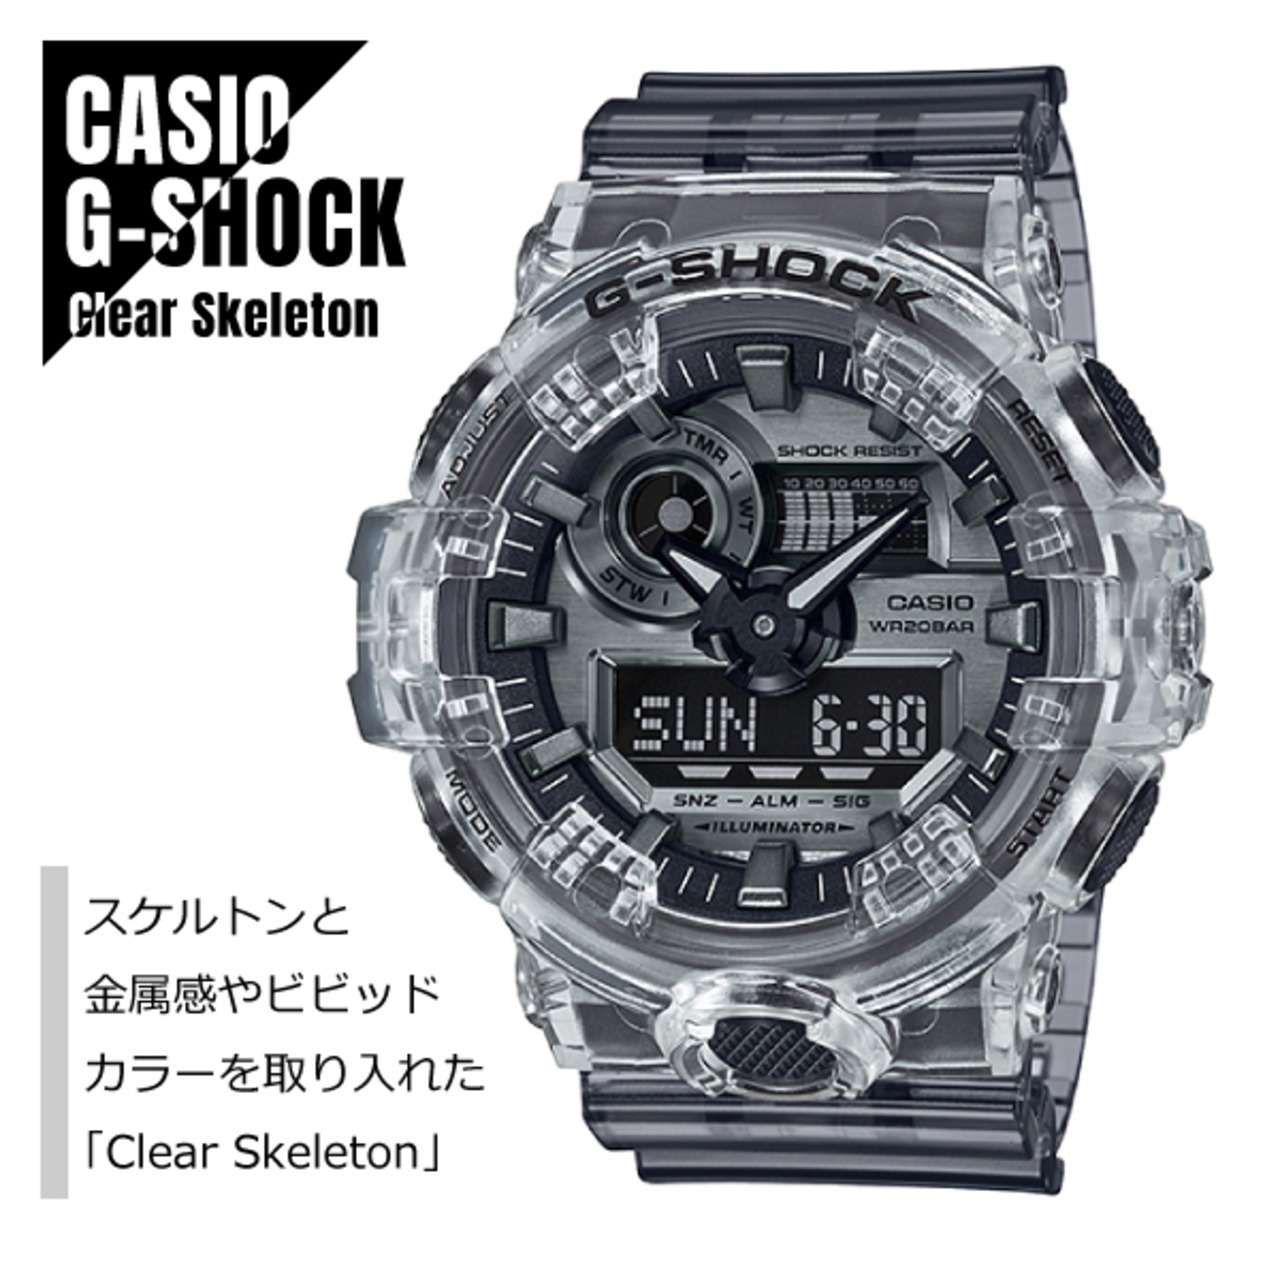 CASIO カシオ G-SHOCK Gショック Clear Skeleton クリアスケルトン アナデジ GA-700SK-1A 腕時計 メンズ